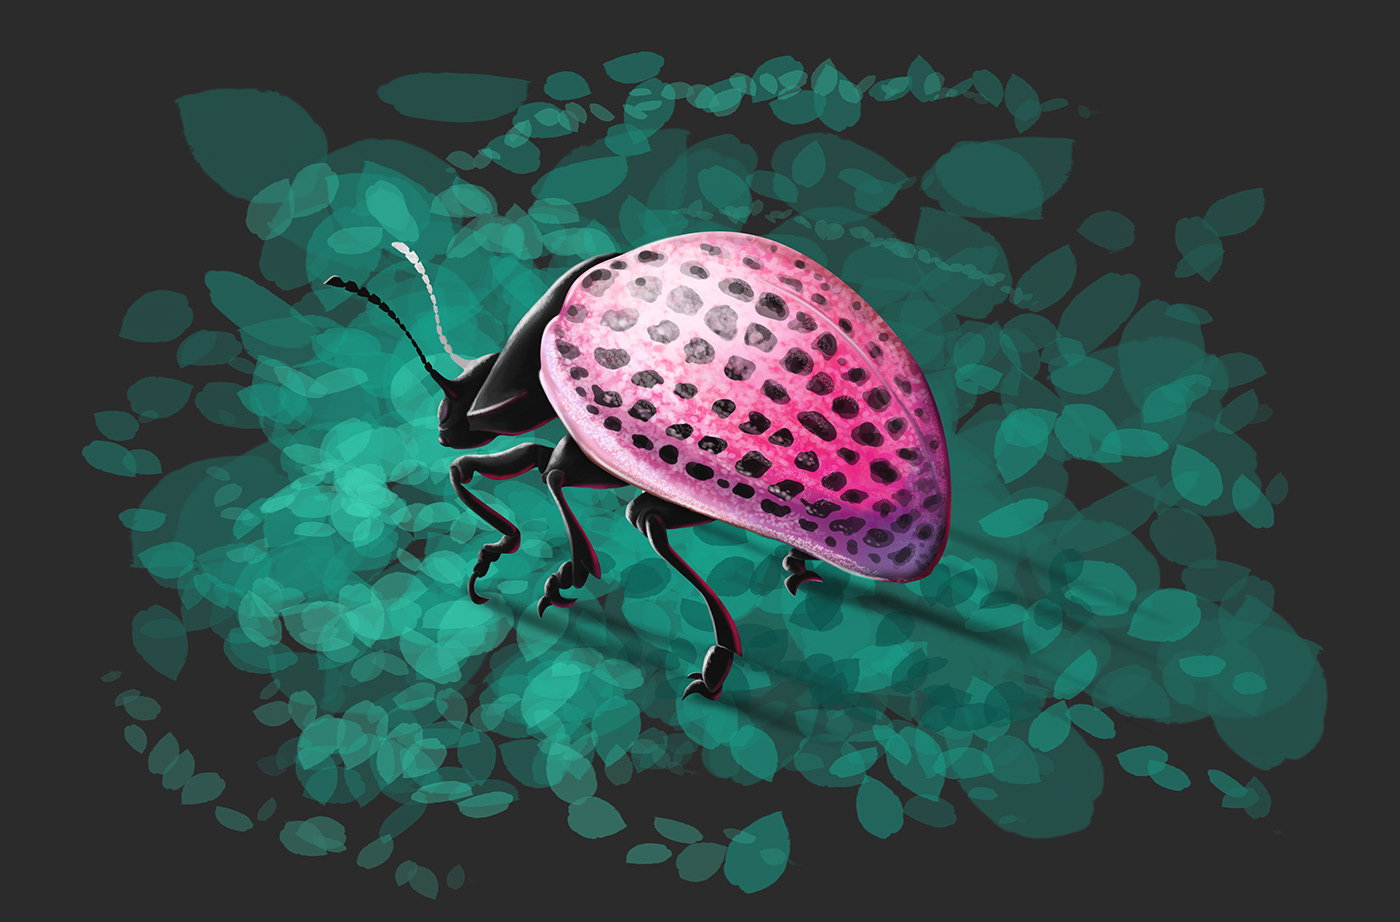 bugs beetles wonderful color variety of shapes textures of surfaces cg art ILLUSTRATION  botanic illustration жуки насекомые